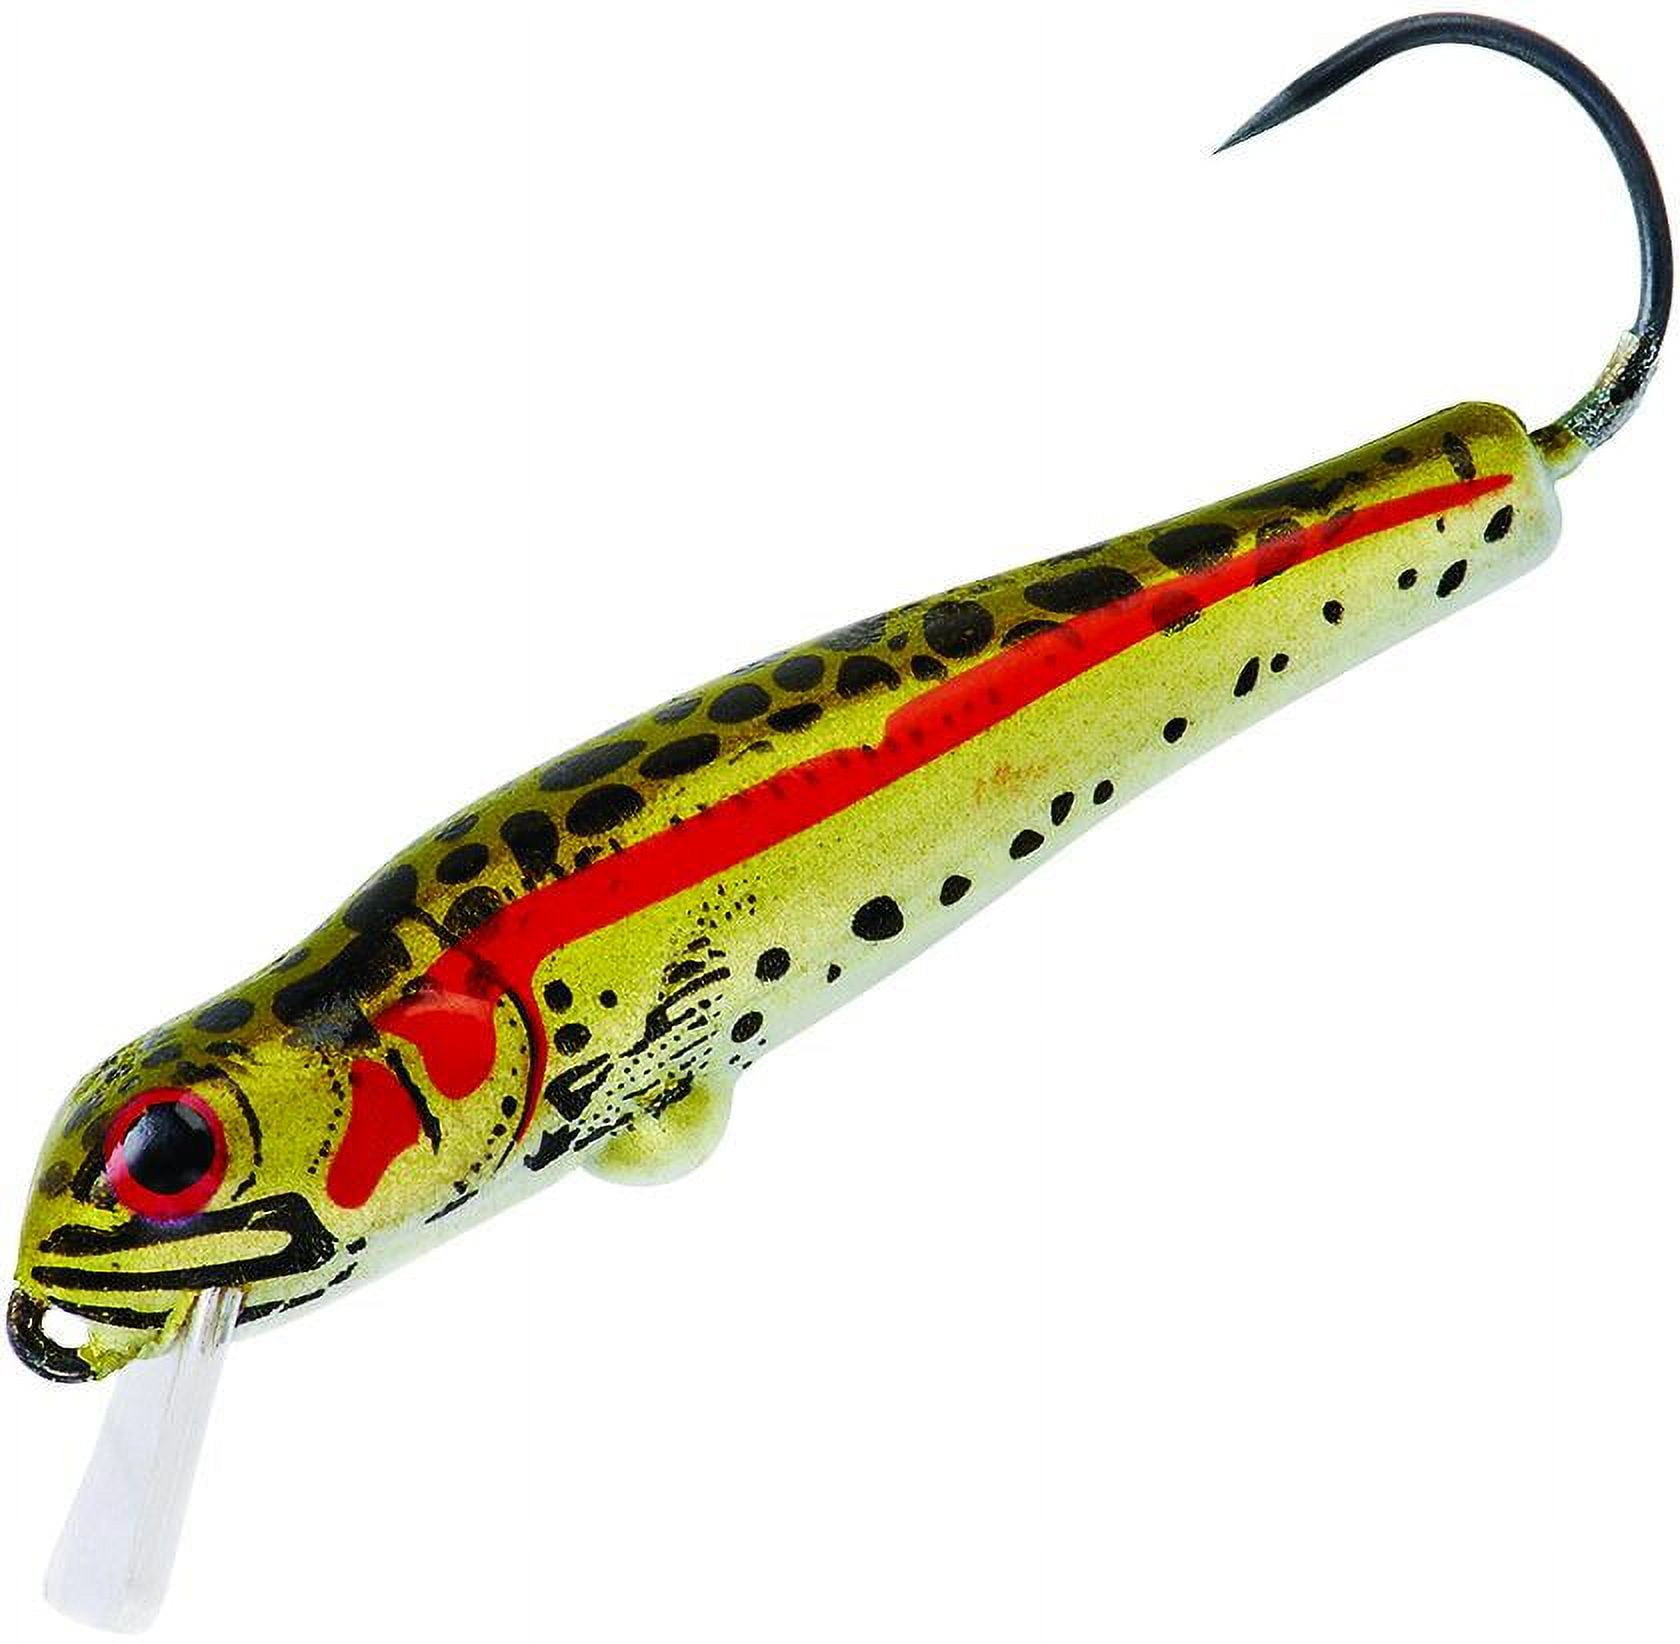 Rebel Micro Min w Fishing Lure Hard bait Rainbow Trout 1 1/2 in 1/16 oz